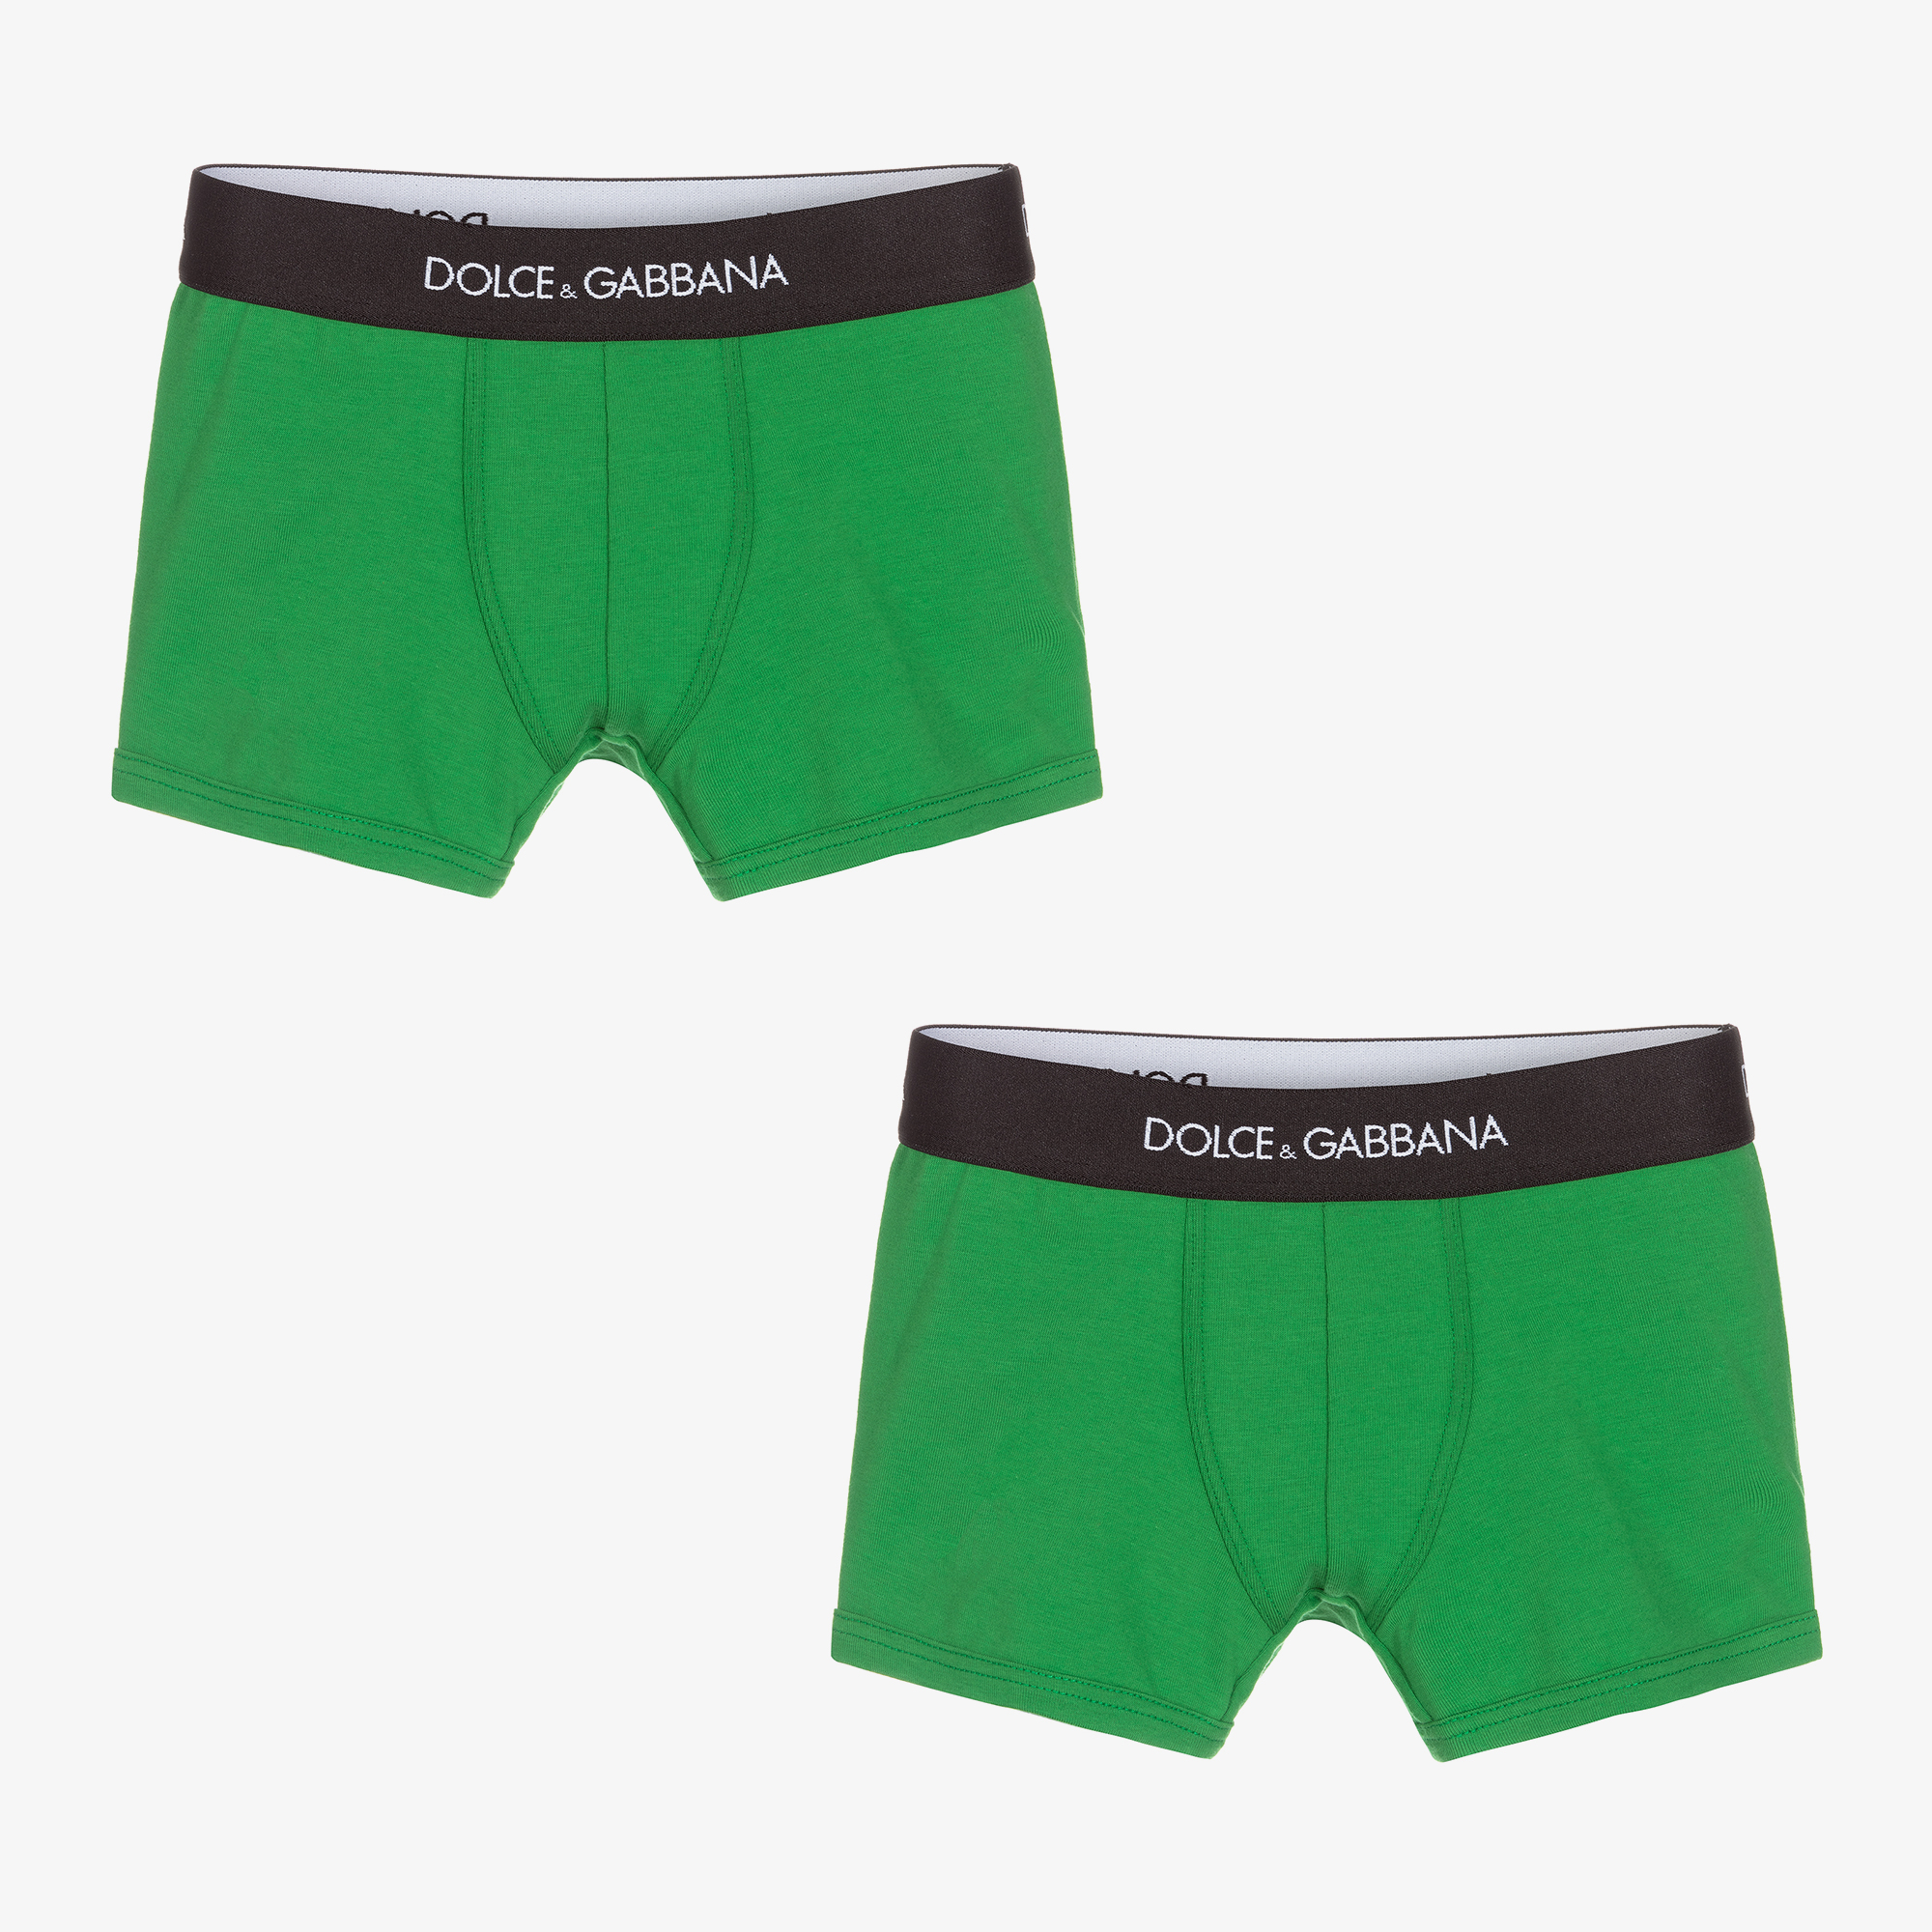 Dolce & Gabbana - Green Logo Boxers (2 Pack)